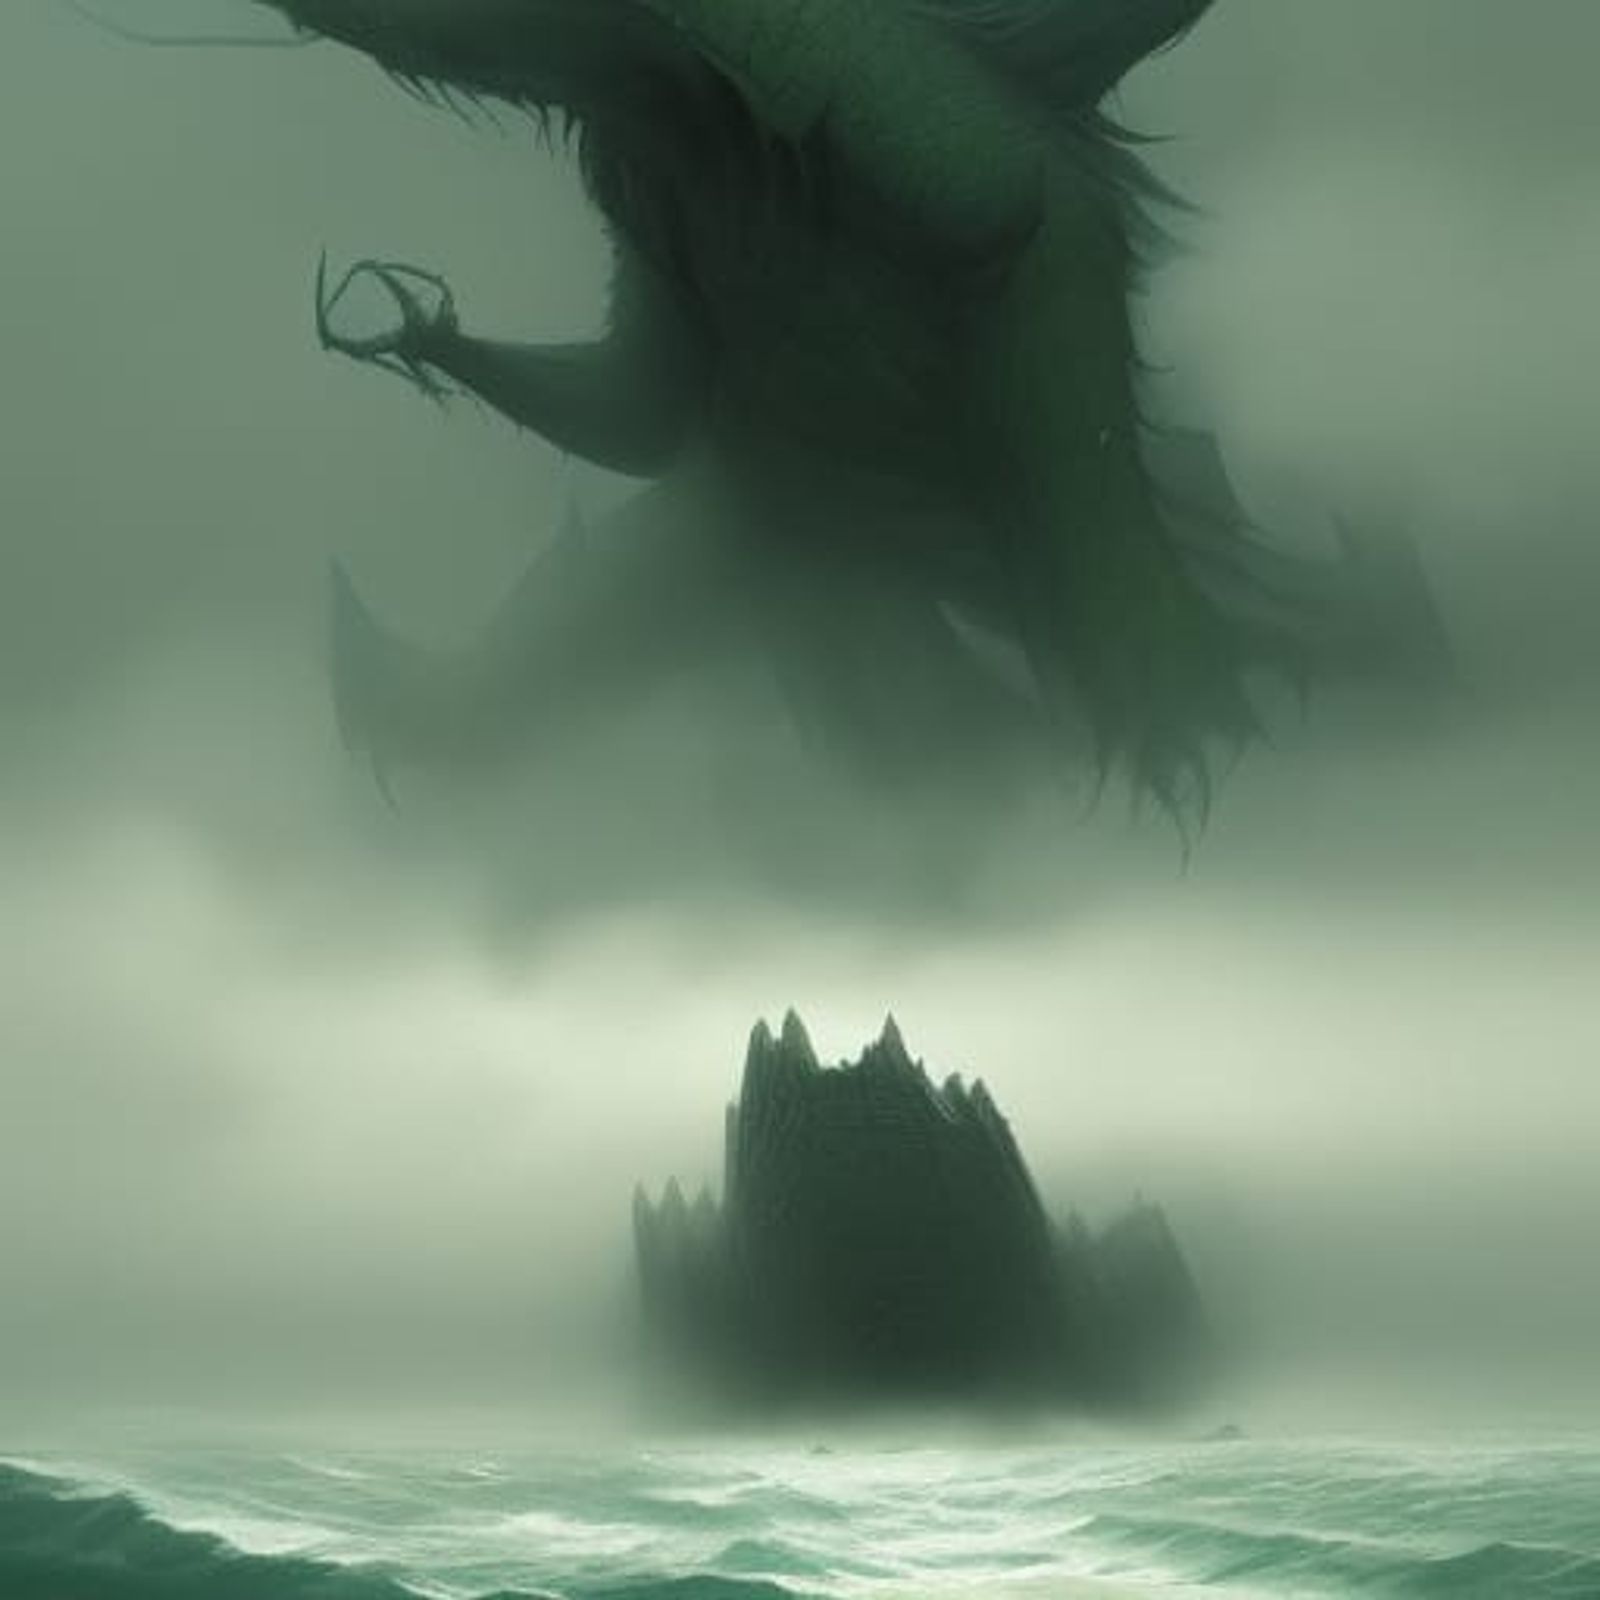 the mist giant creature